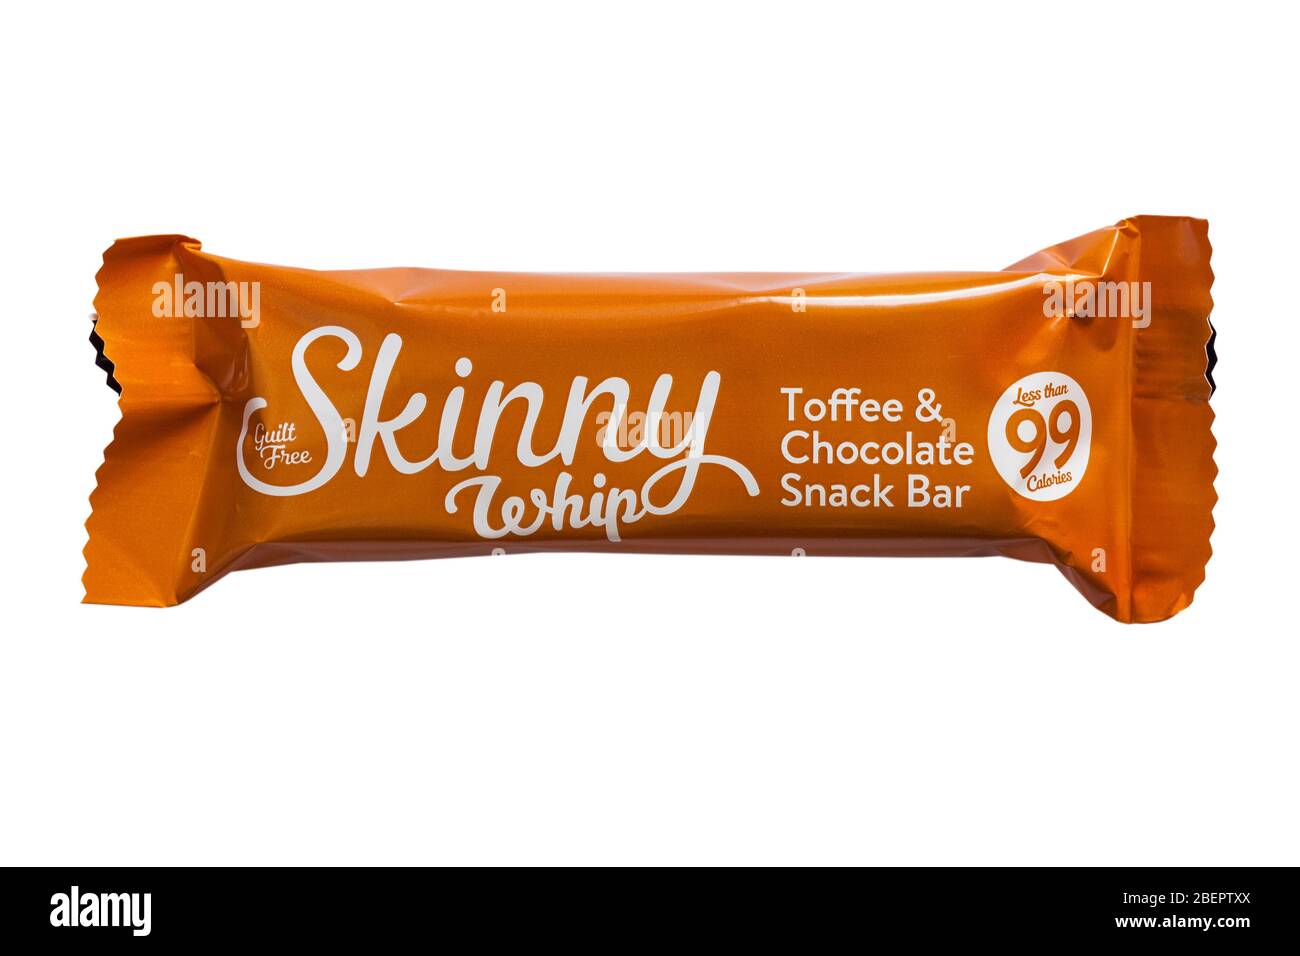 Libre de culpa de látigo delgado Toffee & Chocolate Snack Bar aislado sobre fondo blanco - menos de 99 calorías Foto de stock